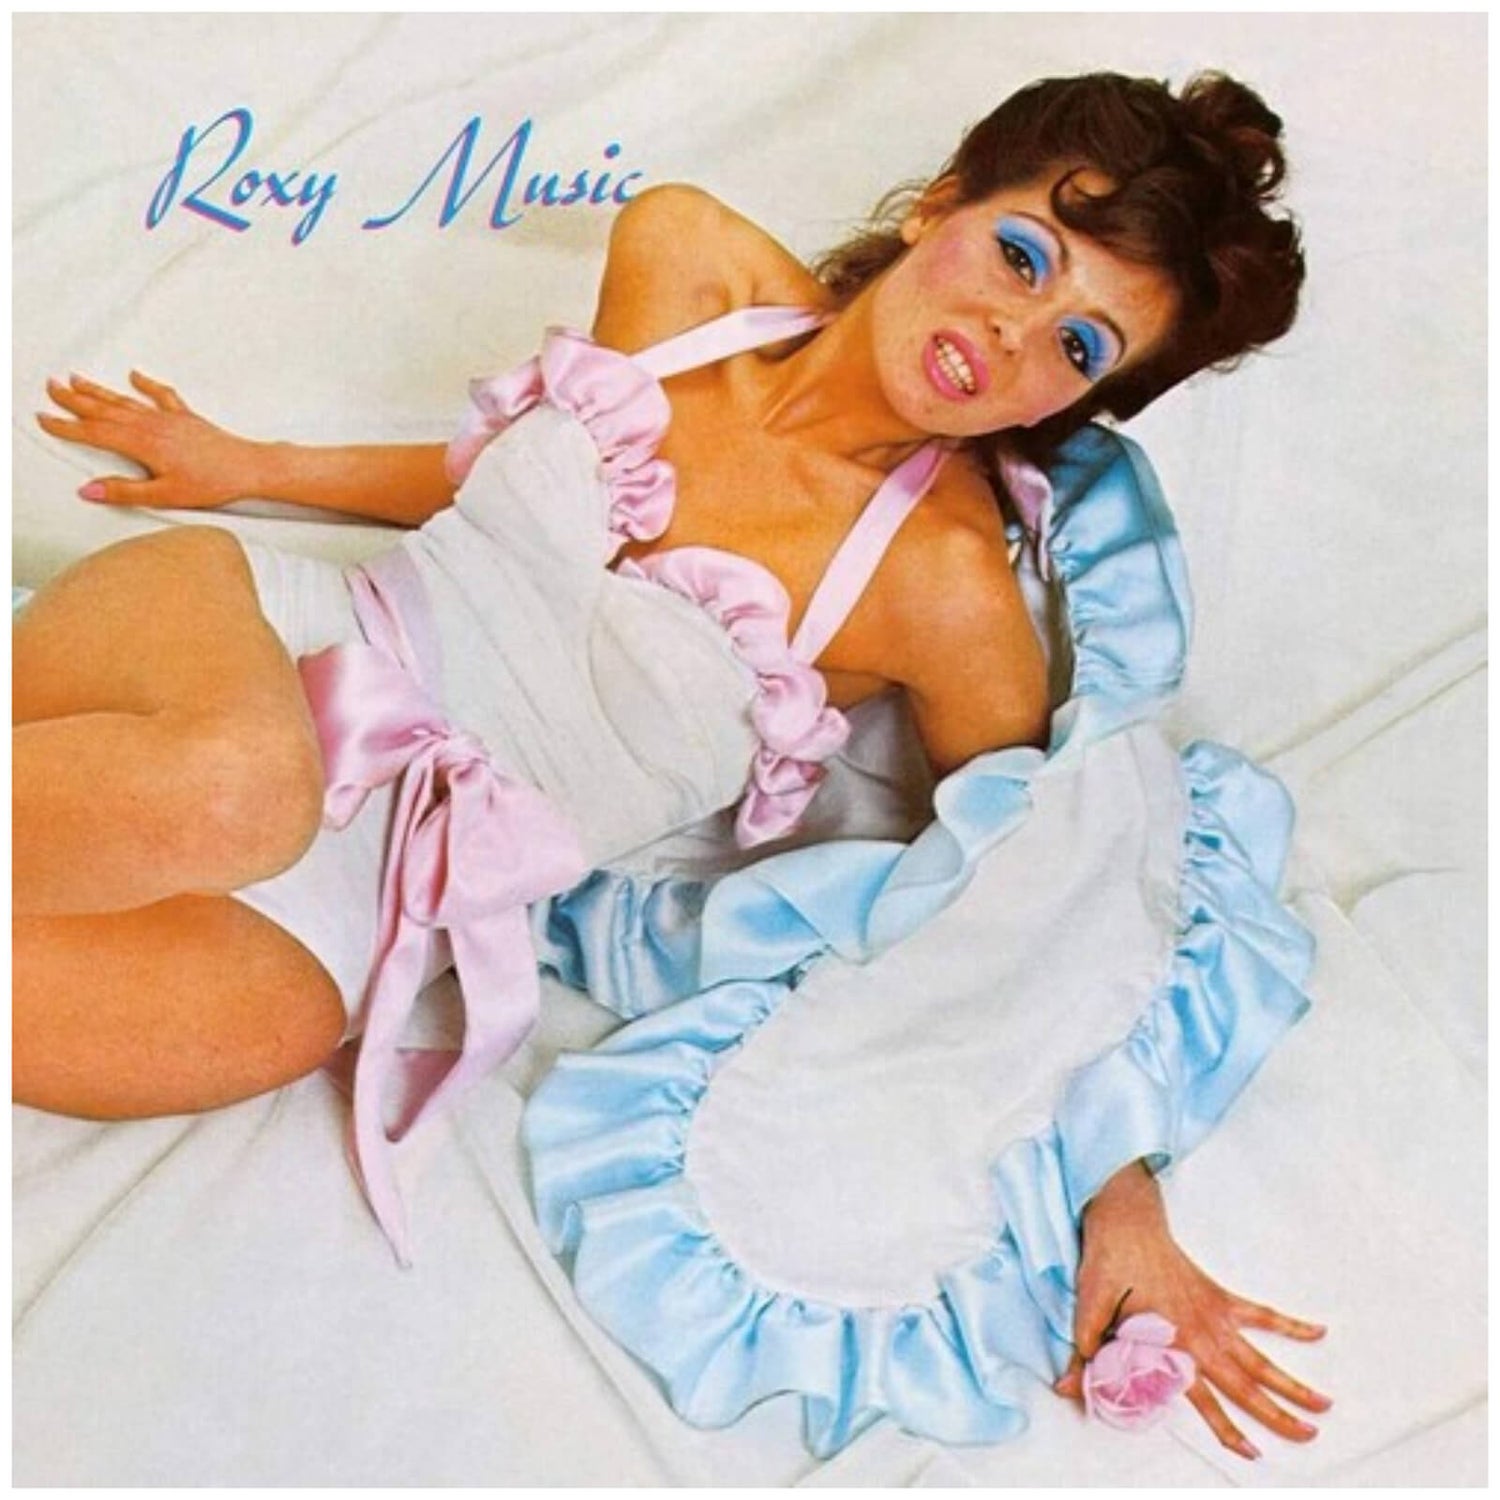 Roxy Music - Roxy Music Vinyl (Half-Speed Mastering)